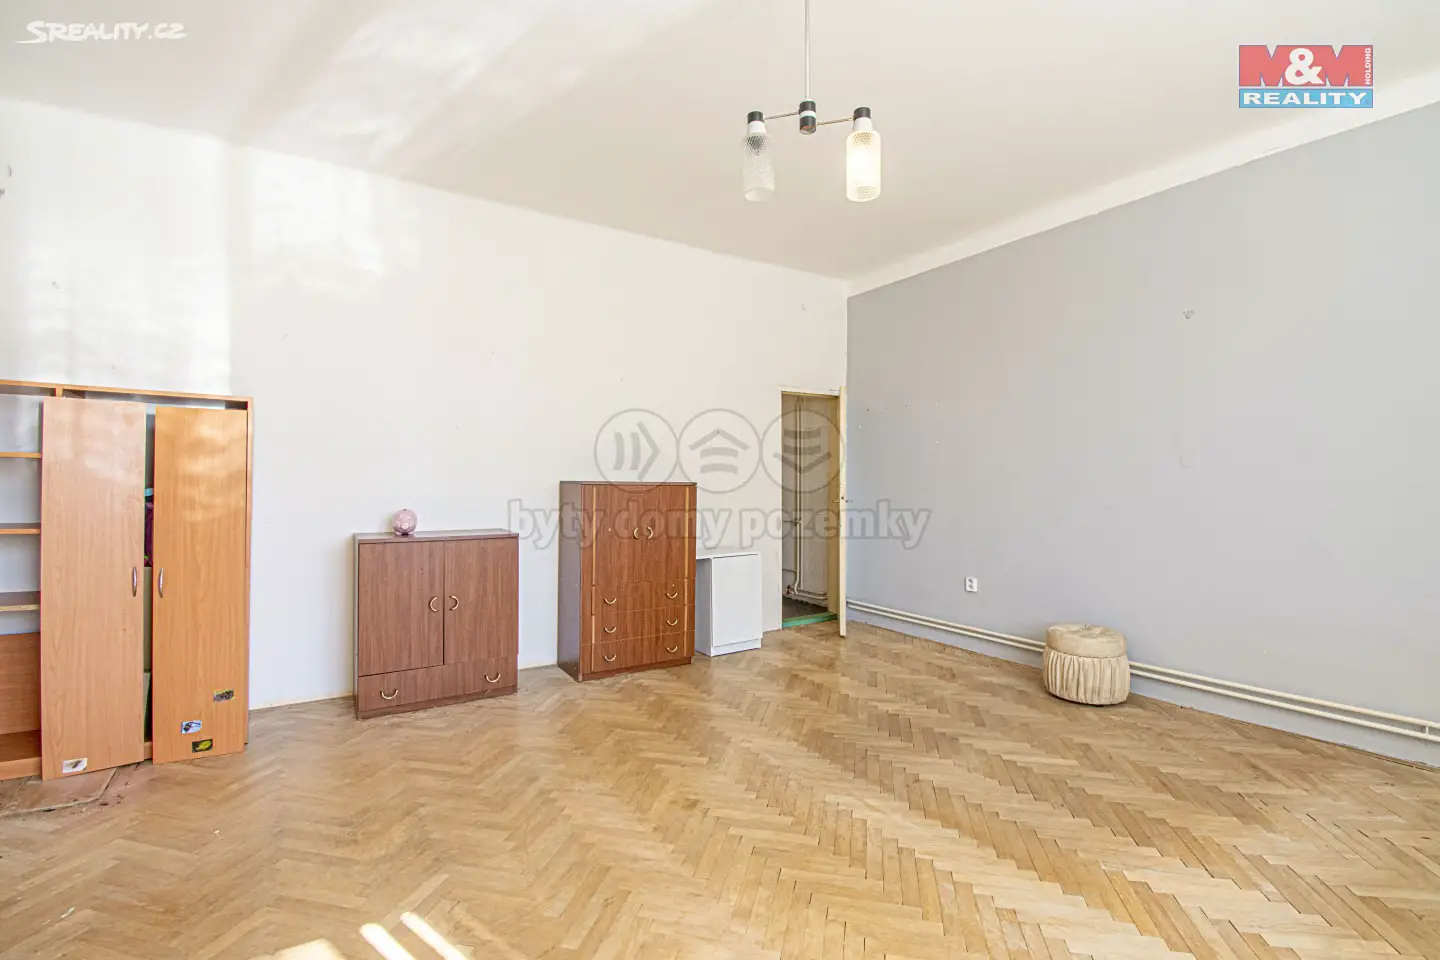 Prodej bytu 2+1 80 m², Hořicova, Krnov - Pod Bezručovým vrchem